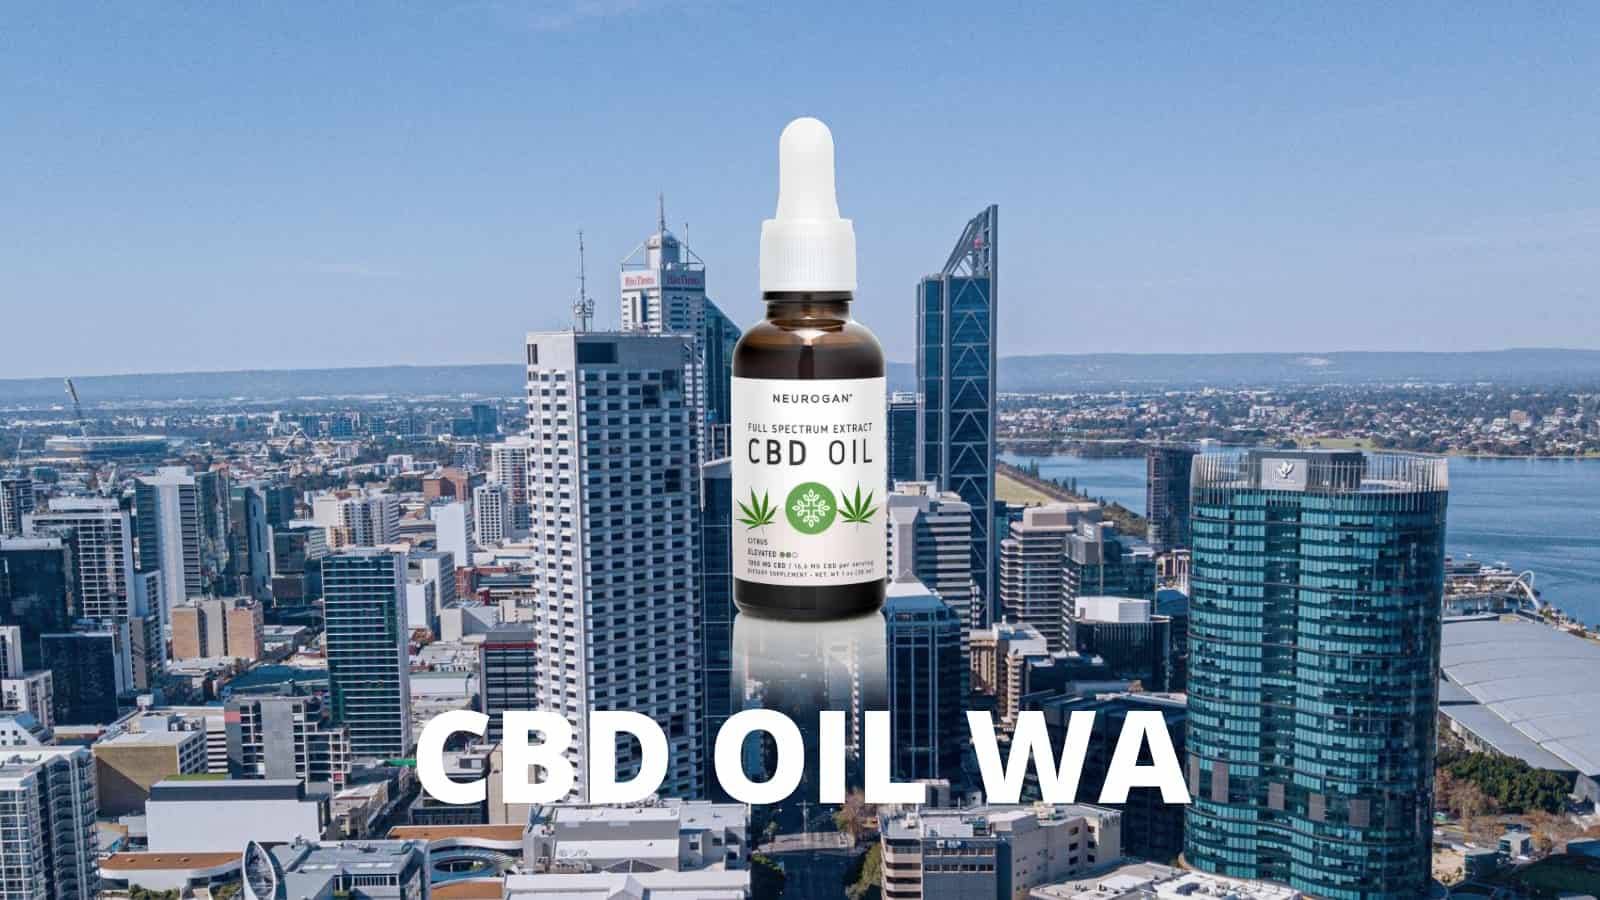 Is CBD Oil Legal in Perth, WA?